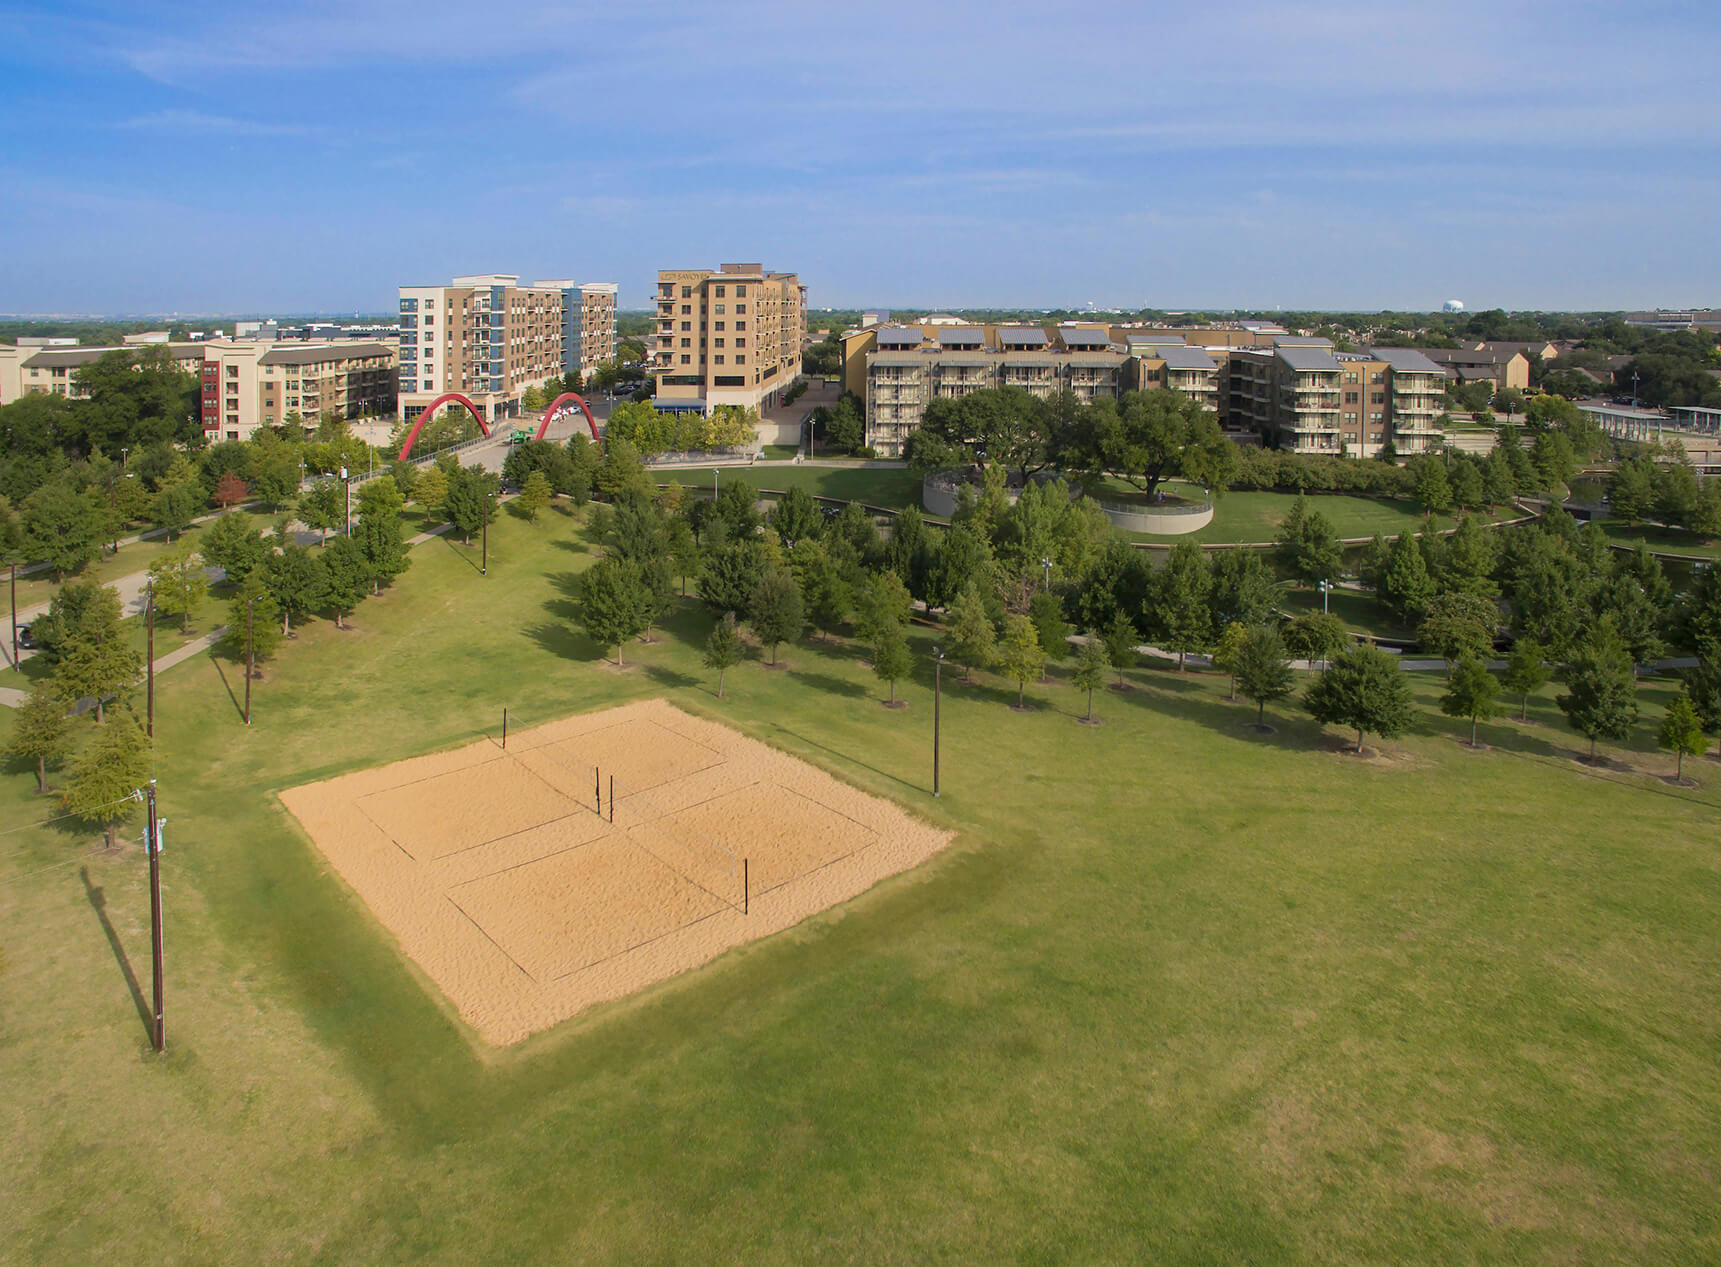 Vitruvian Park sand volleyball court